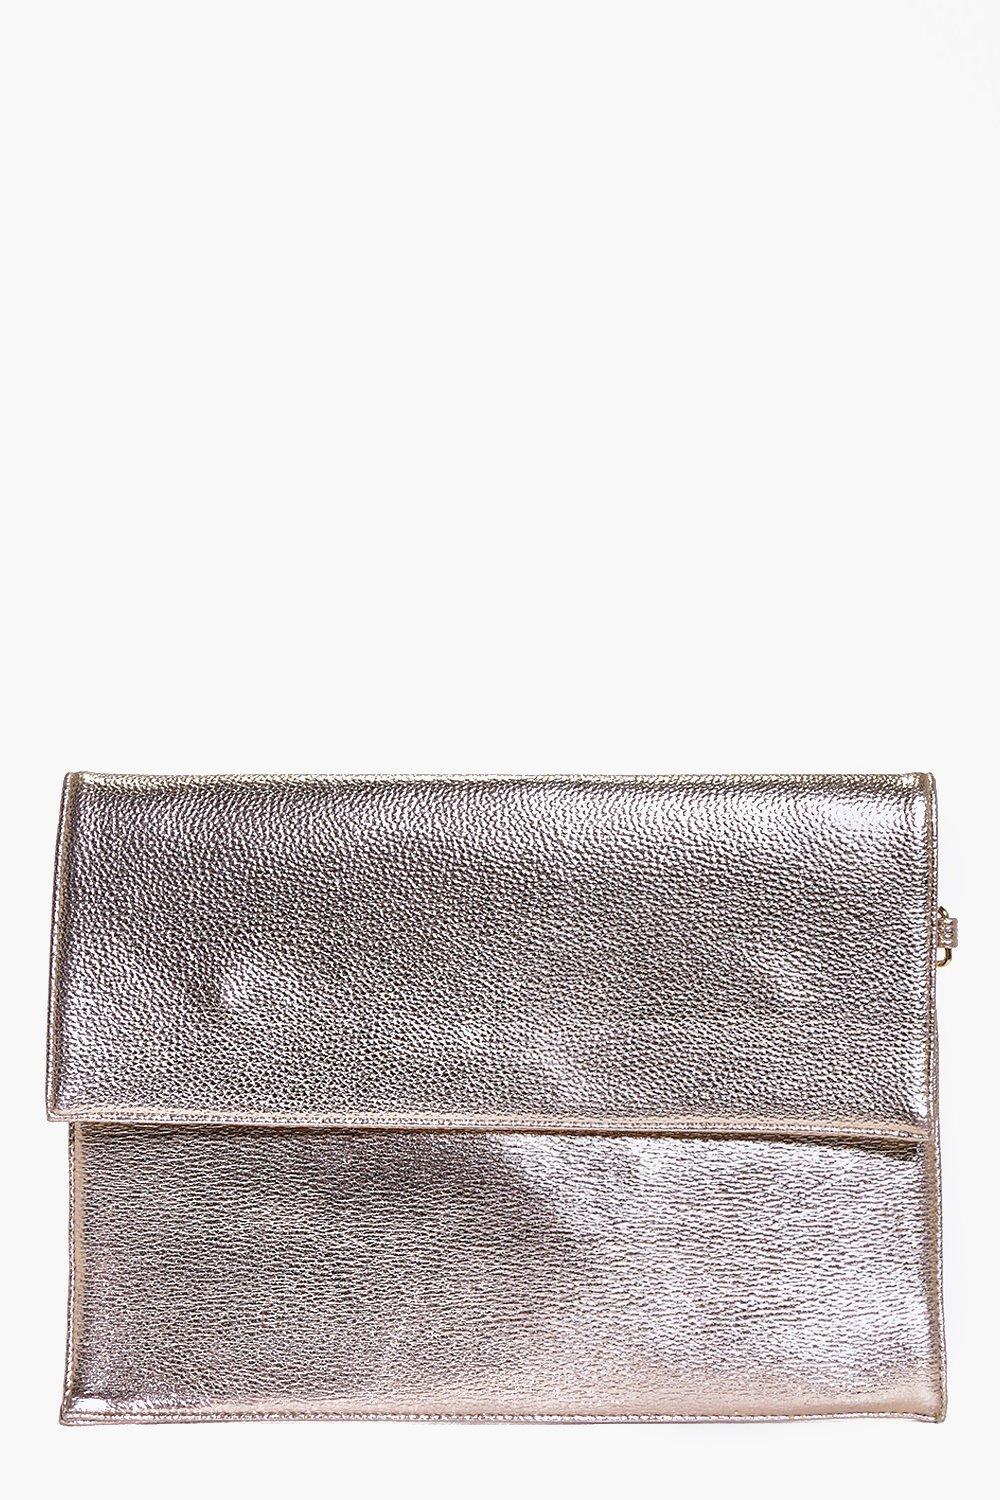 metallic clutch bag